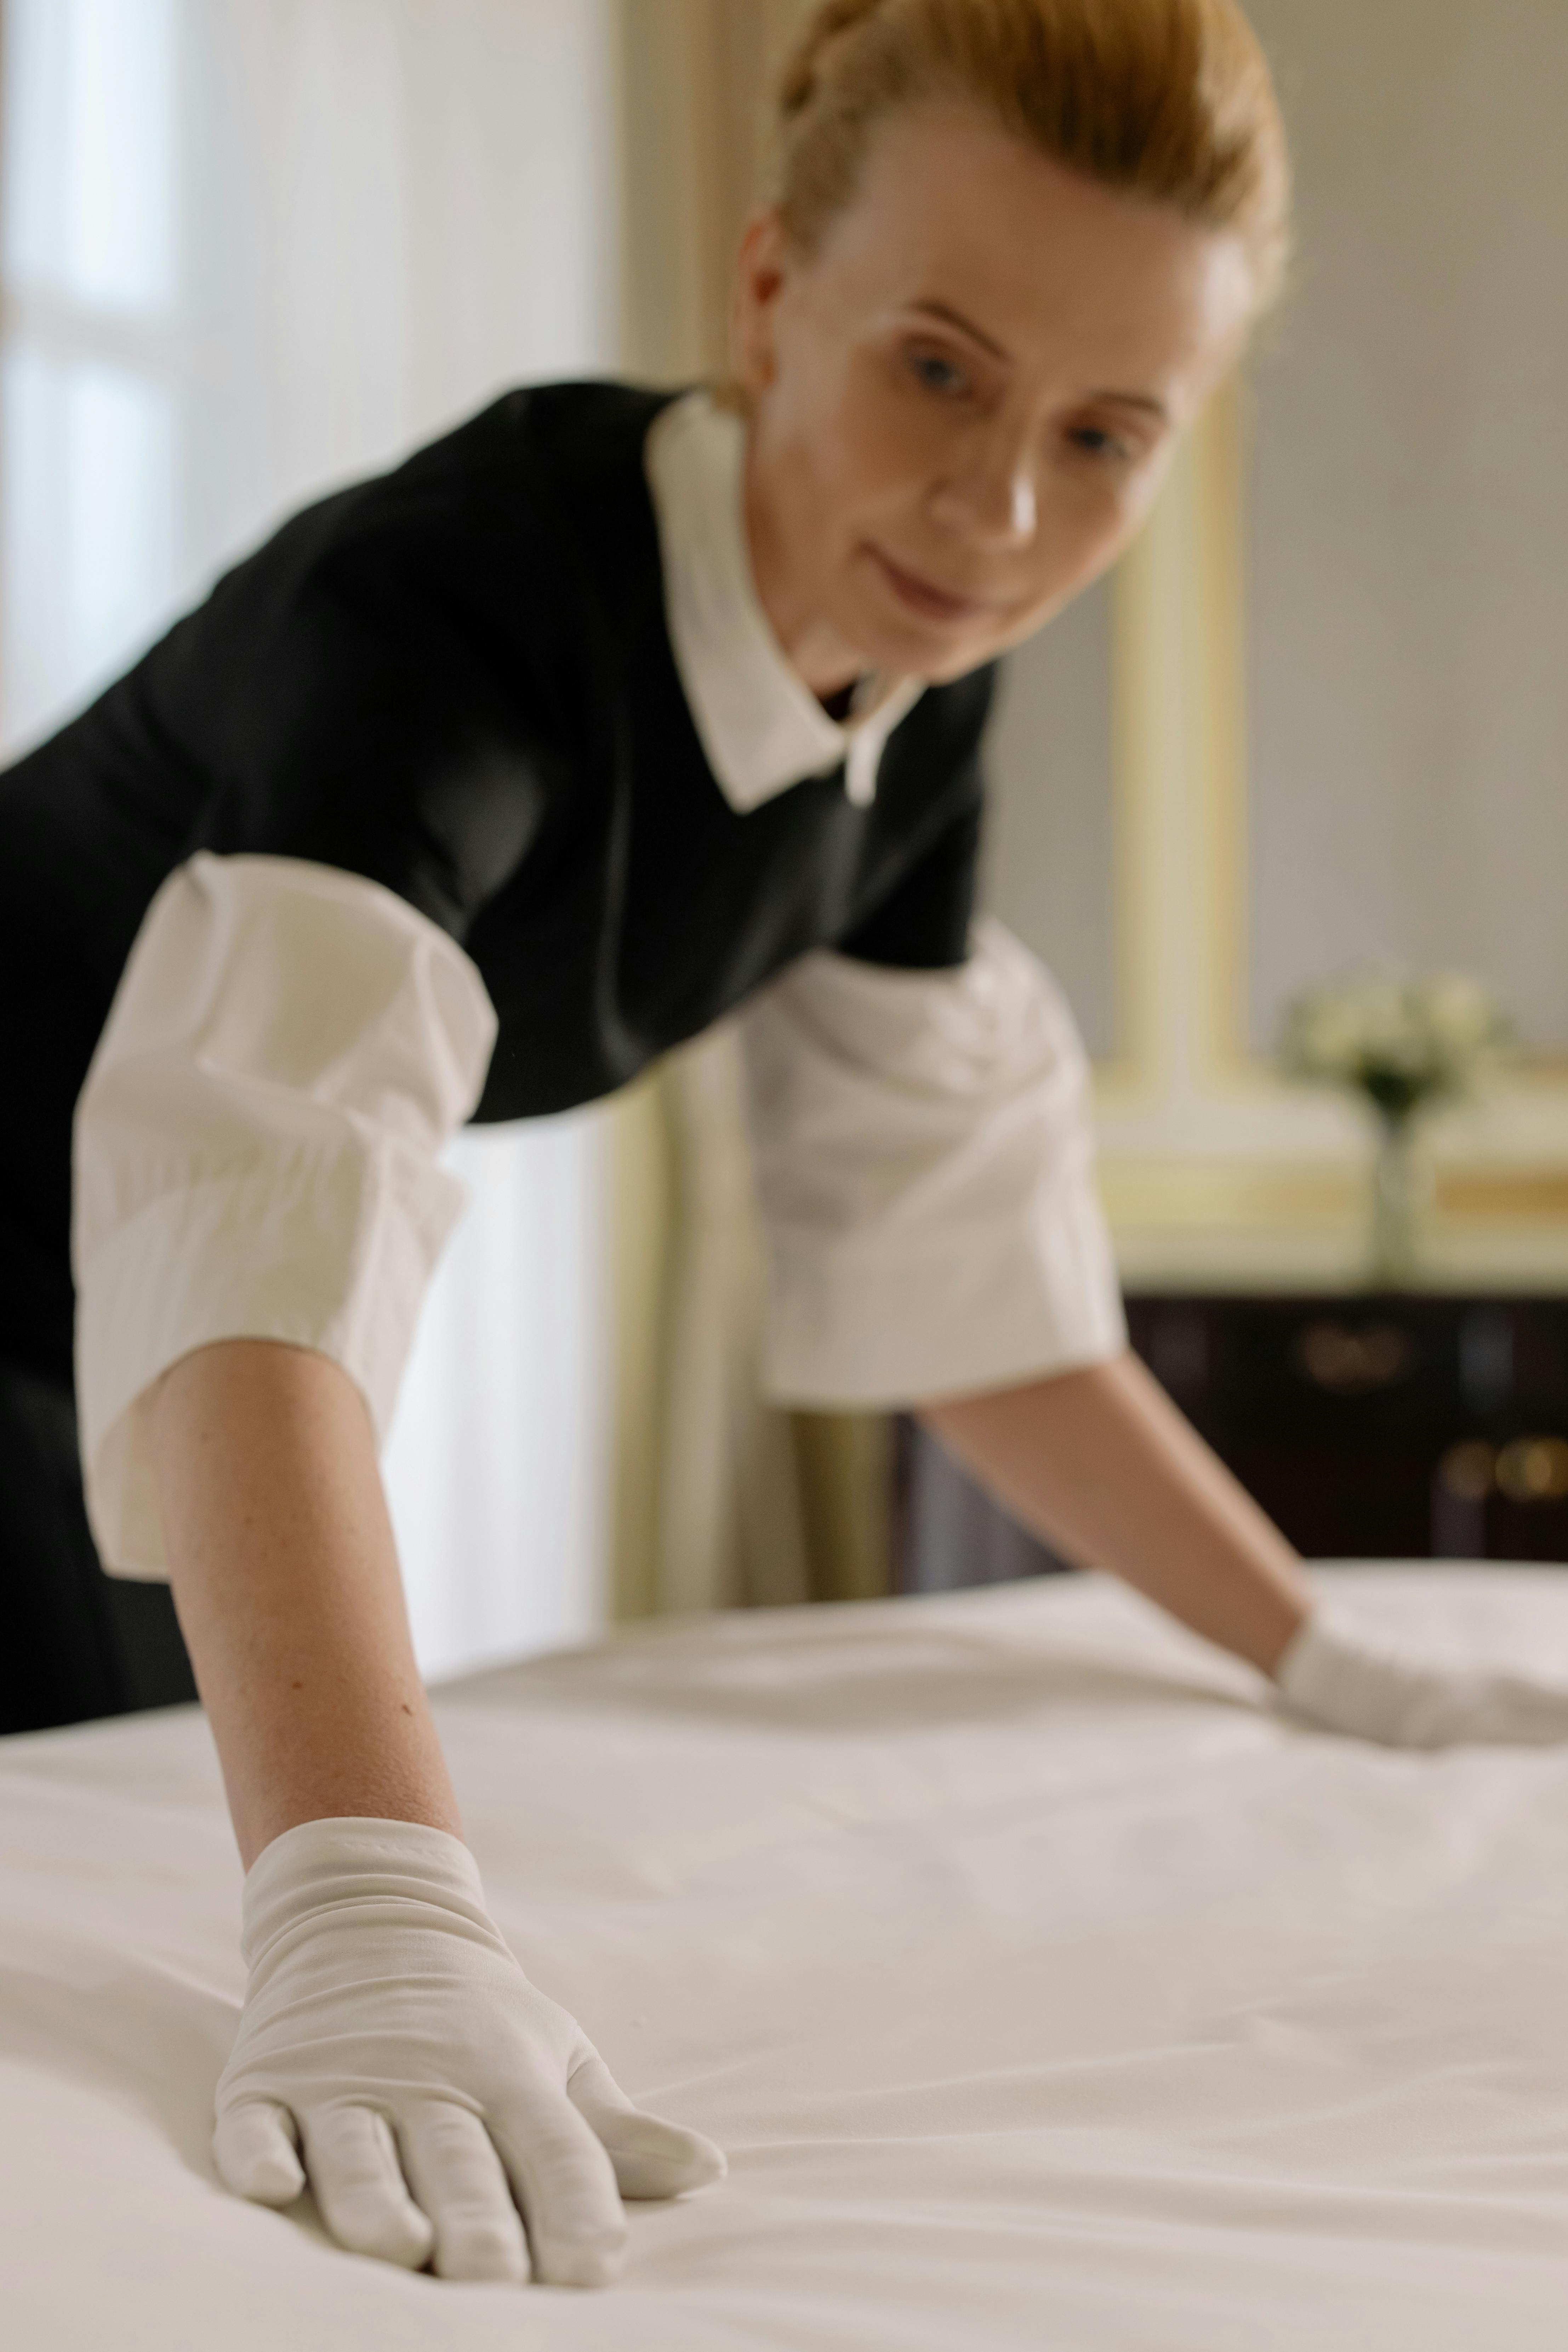 Woman tiding up a hotel room | Source: Pexels